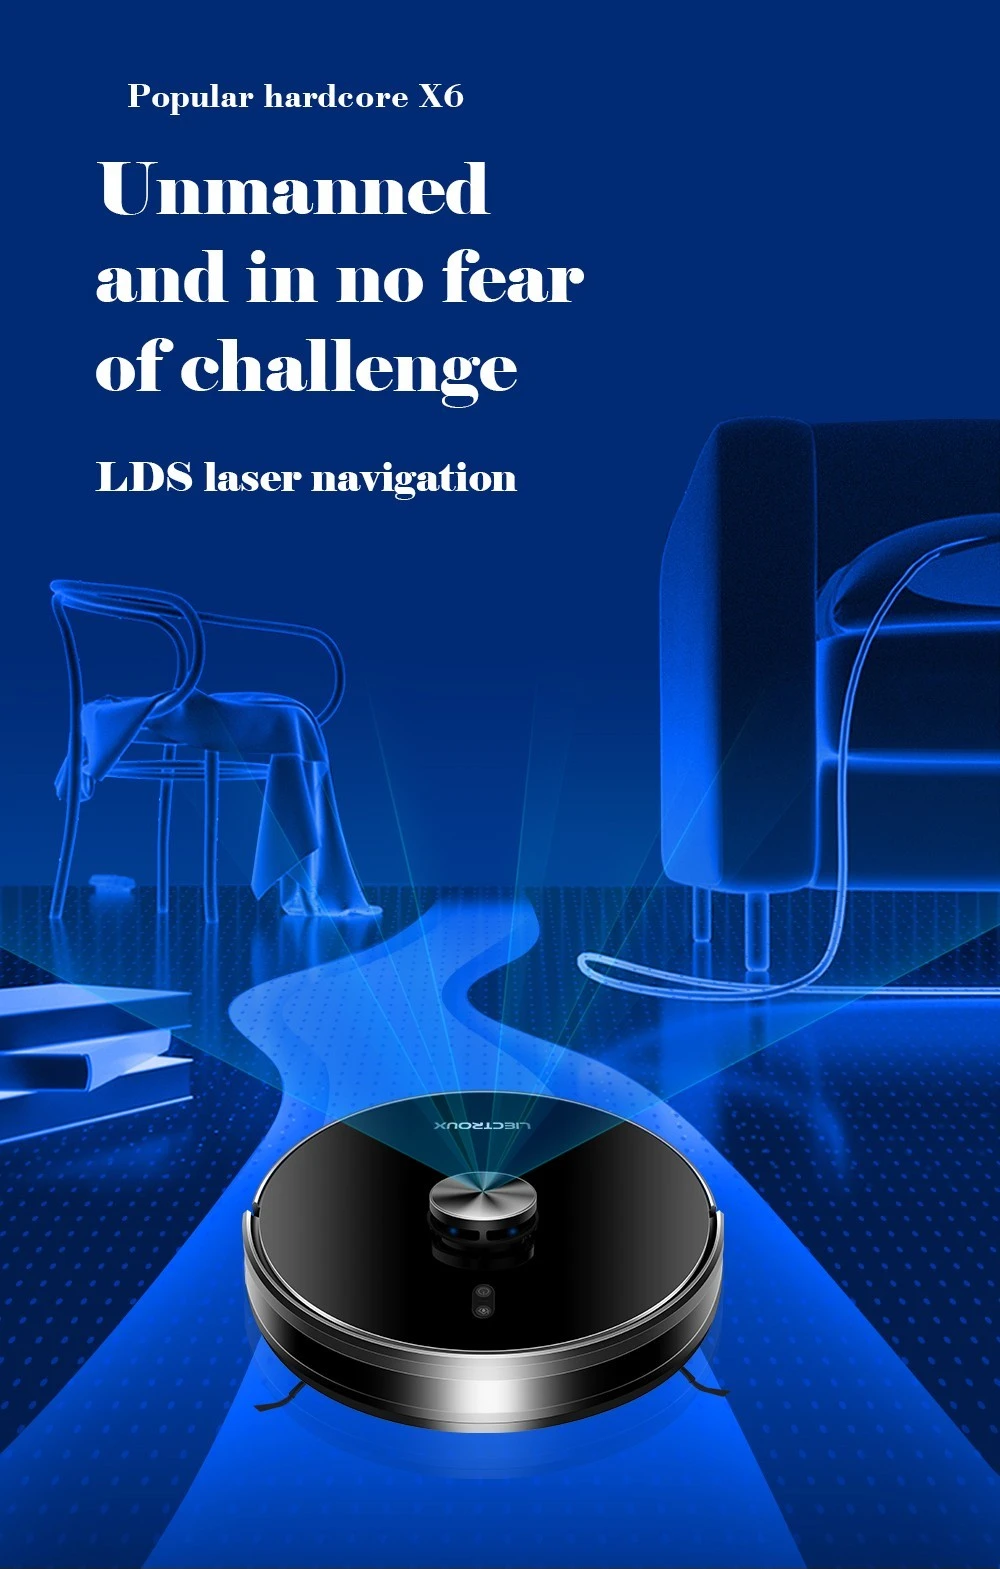 Liectroux X6 Robot Vacuum Cleaner, 6500Pa Suction, LDS Laser Navigation, 235ml Water Tank, 400ml Dustbin, 5 Maps Saved, 2600mAh Battery, App/Voice Control